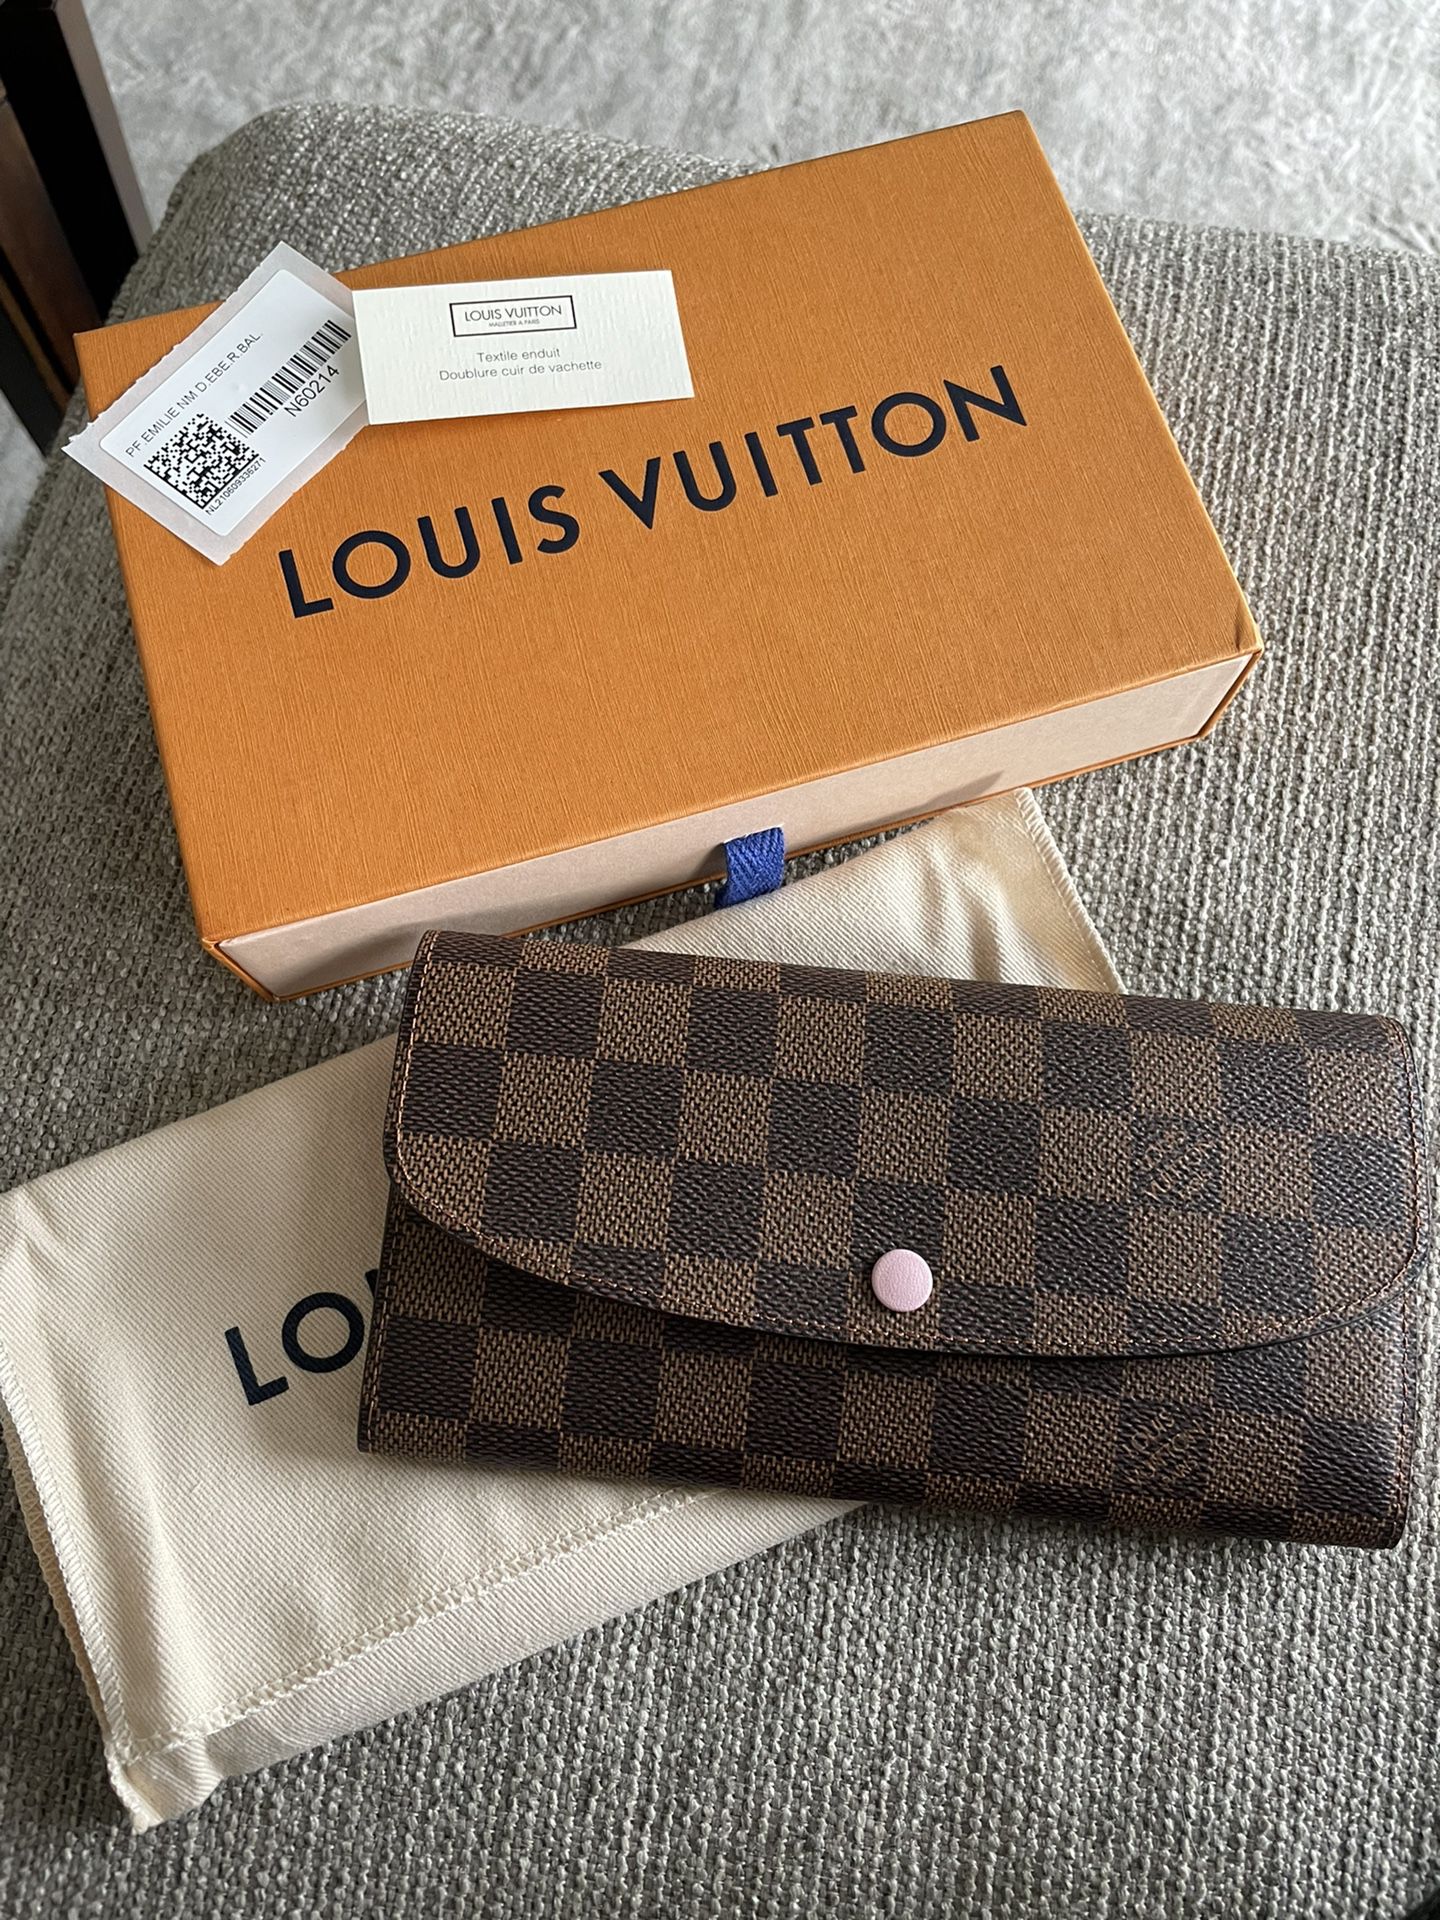 Brand New Louis Vuitton Wallet